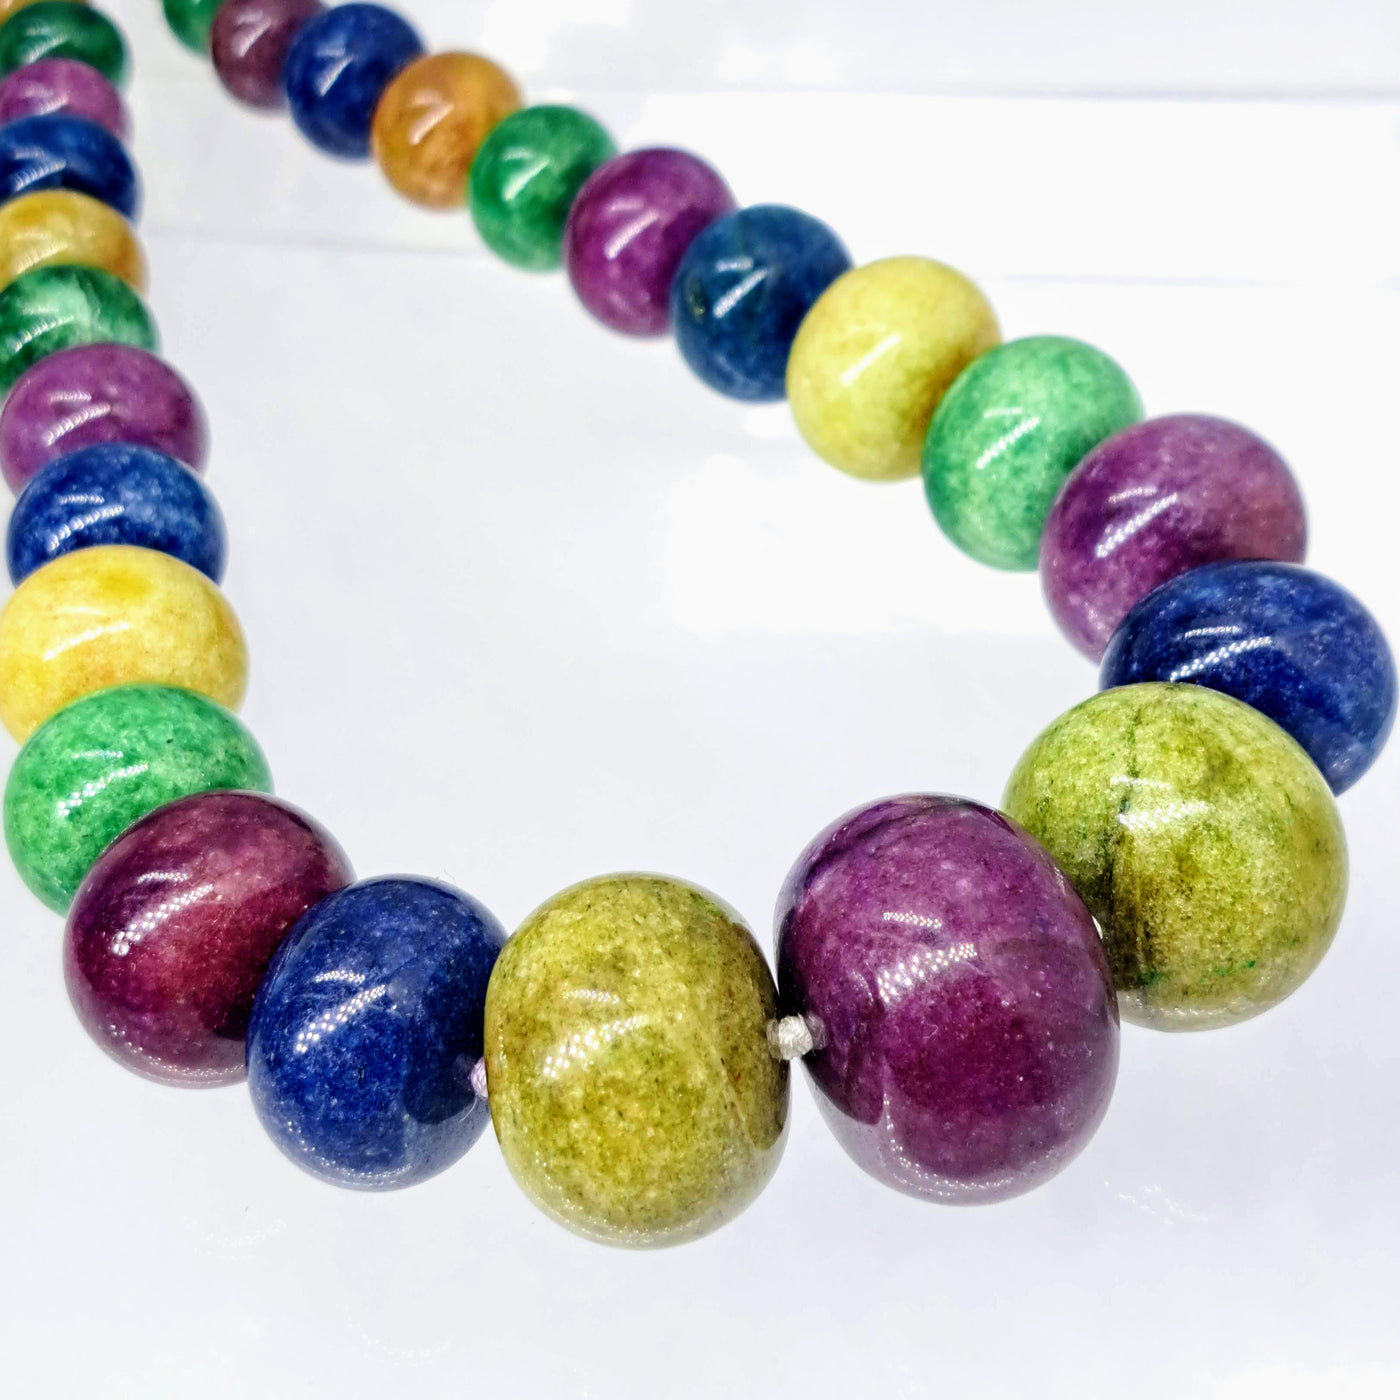 "Lady Balls" 18"-20" Necklace - Multi-color Quartzite, Sterling